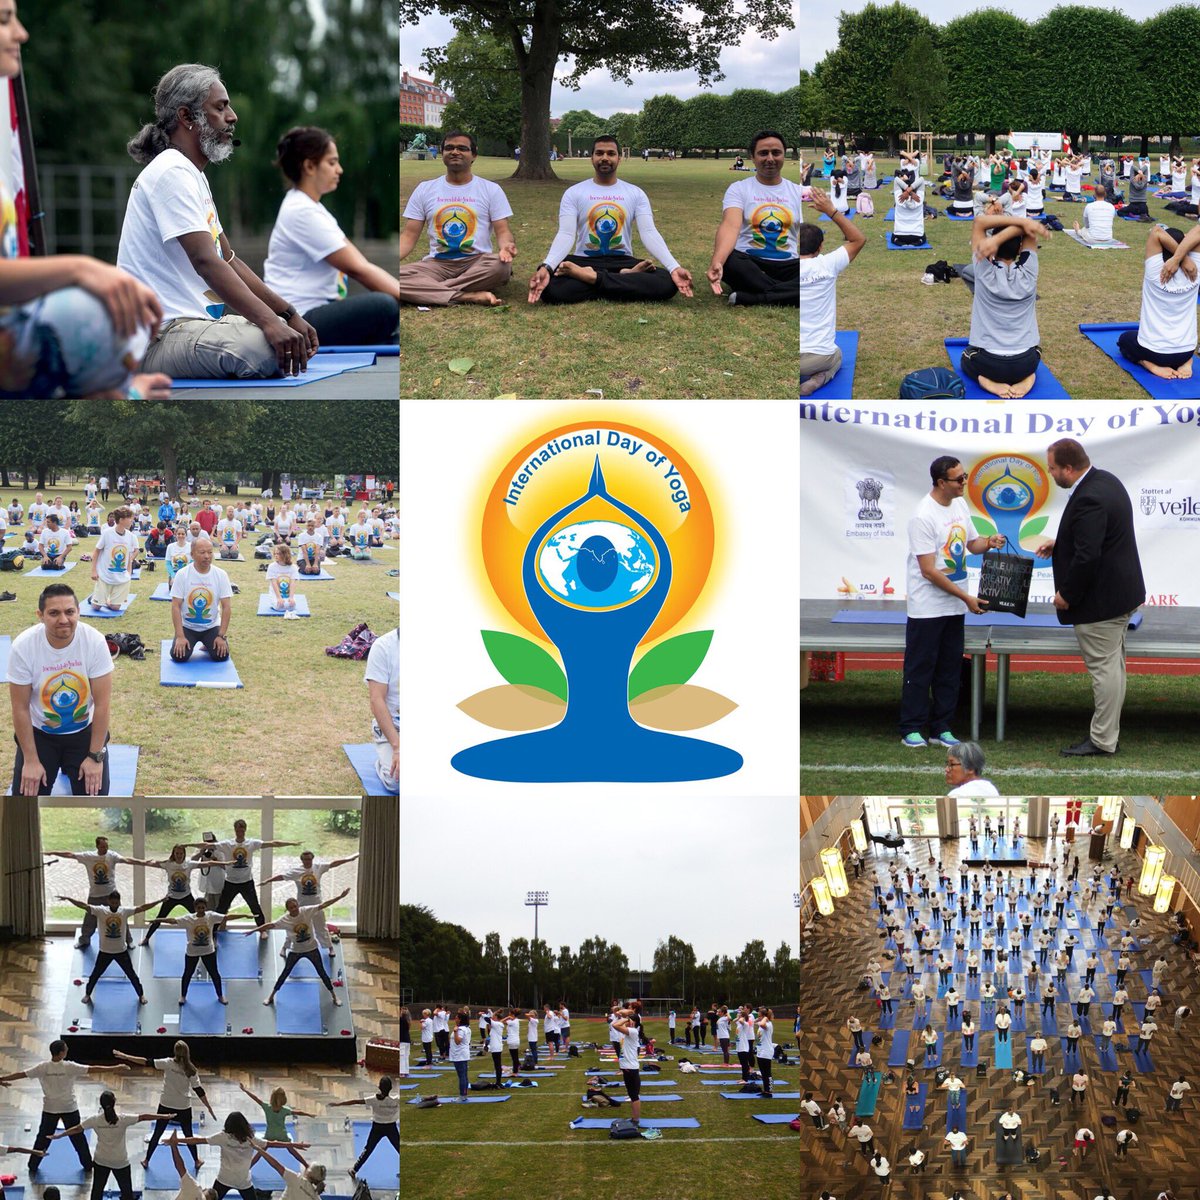 Happy International Day of Yoga! Moments from Embassy of India in Denmark’s celebrations all over the country. 

#idy2018 #internationalyogaday2018 #yoga #zindagirahekhush #vejle #aarhus #copenhagen #kongenshave #wellness @moayush